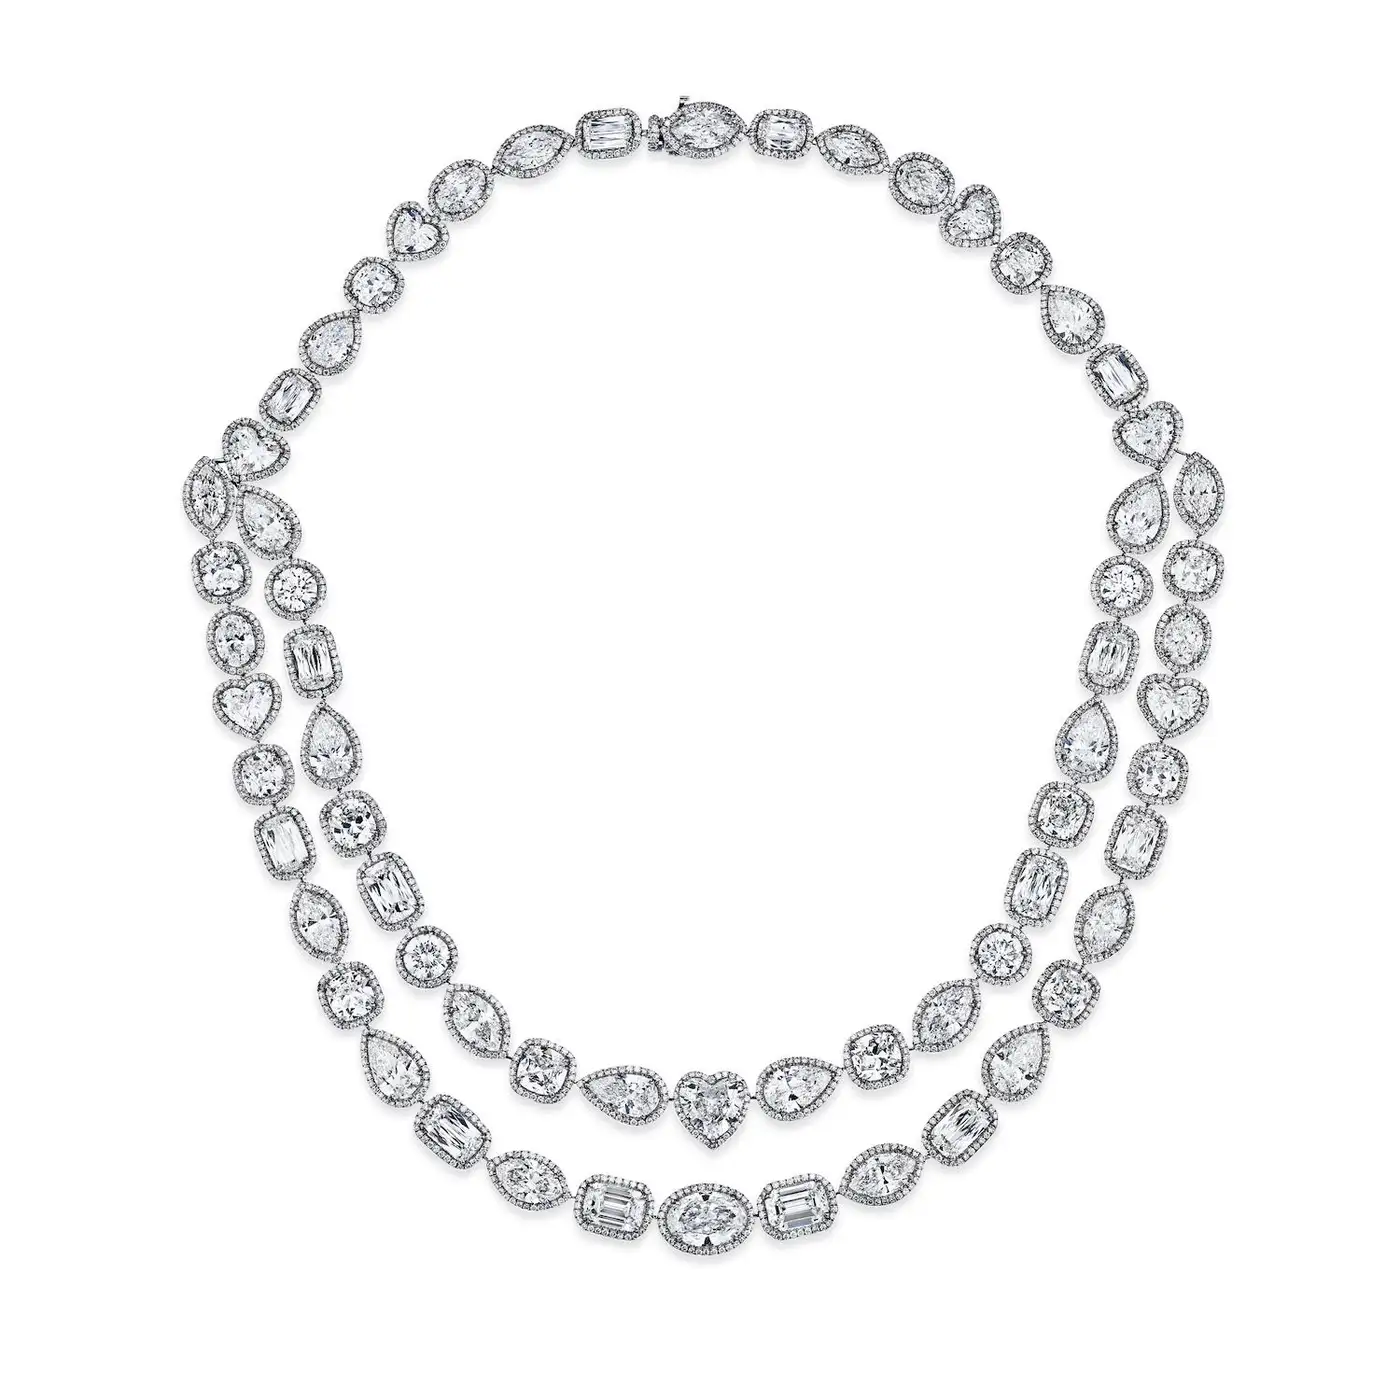 William-Goldberg-63-Carat-Spectacular-Diamond-Infinity-Necklace-5.webp